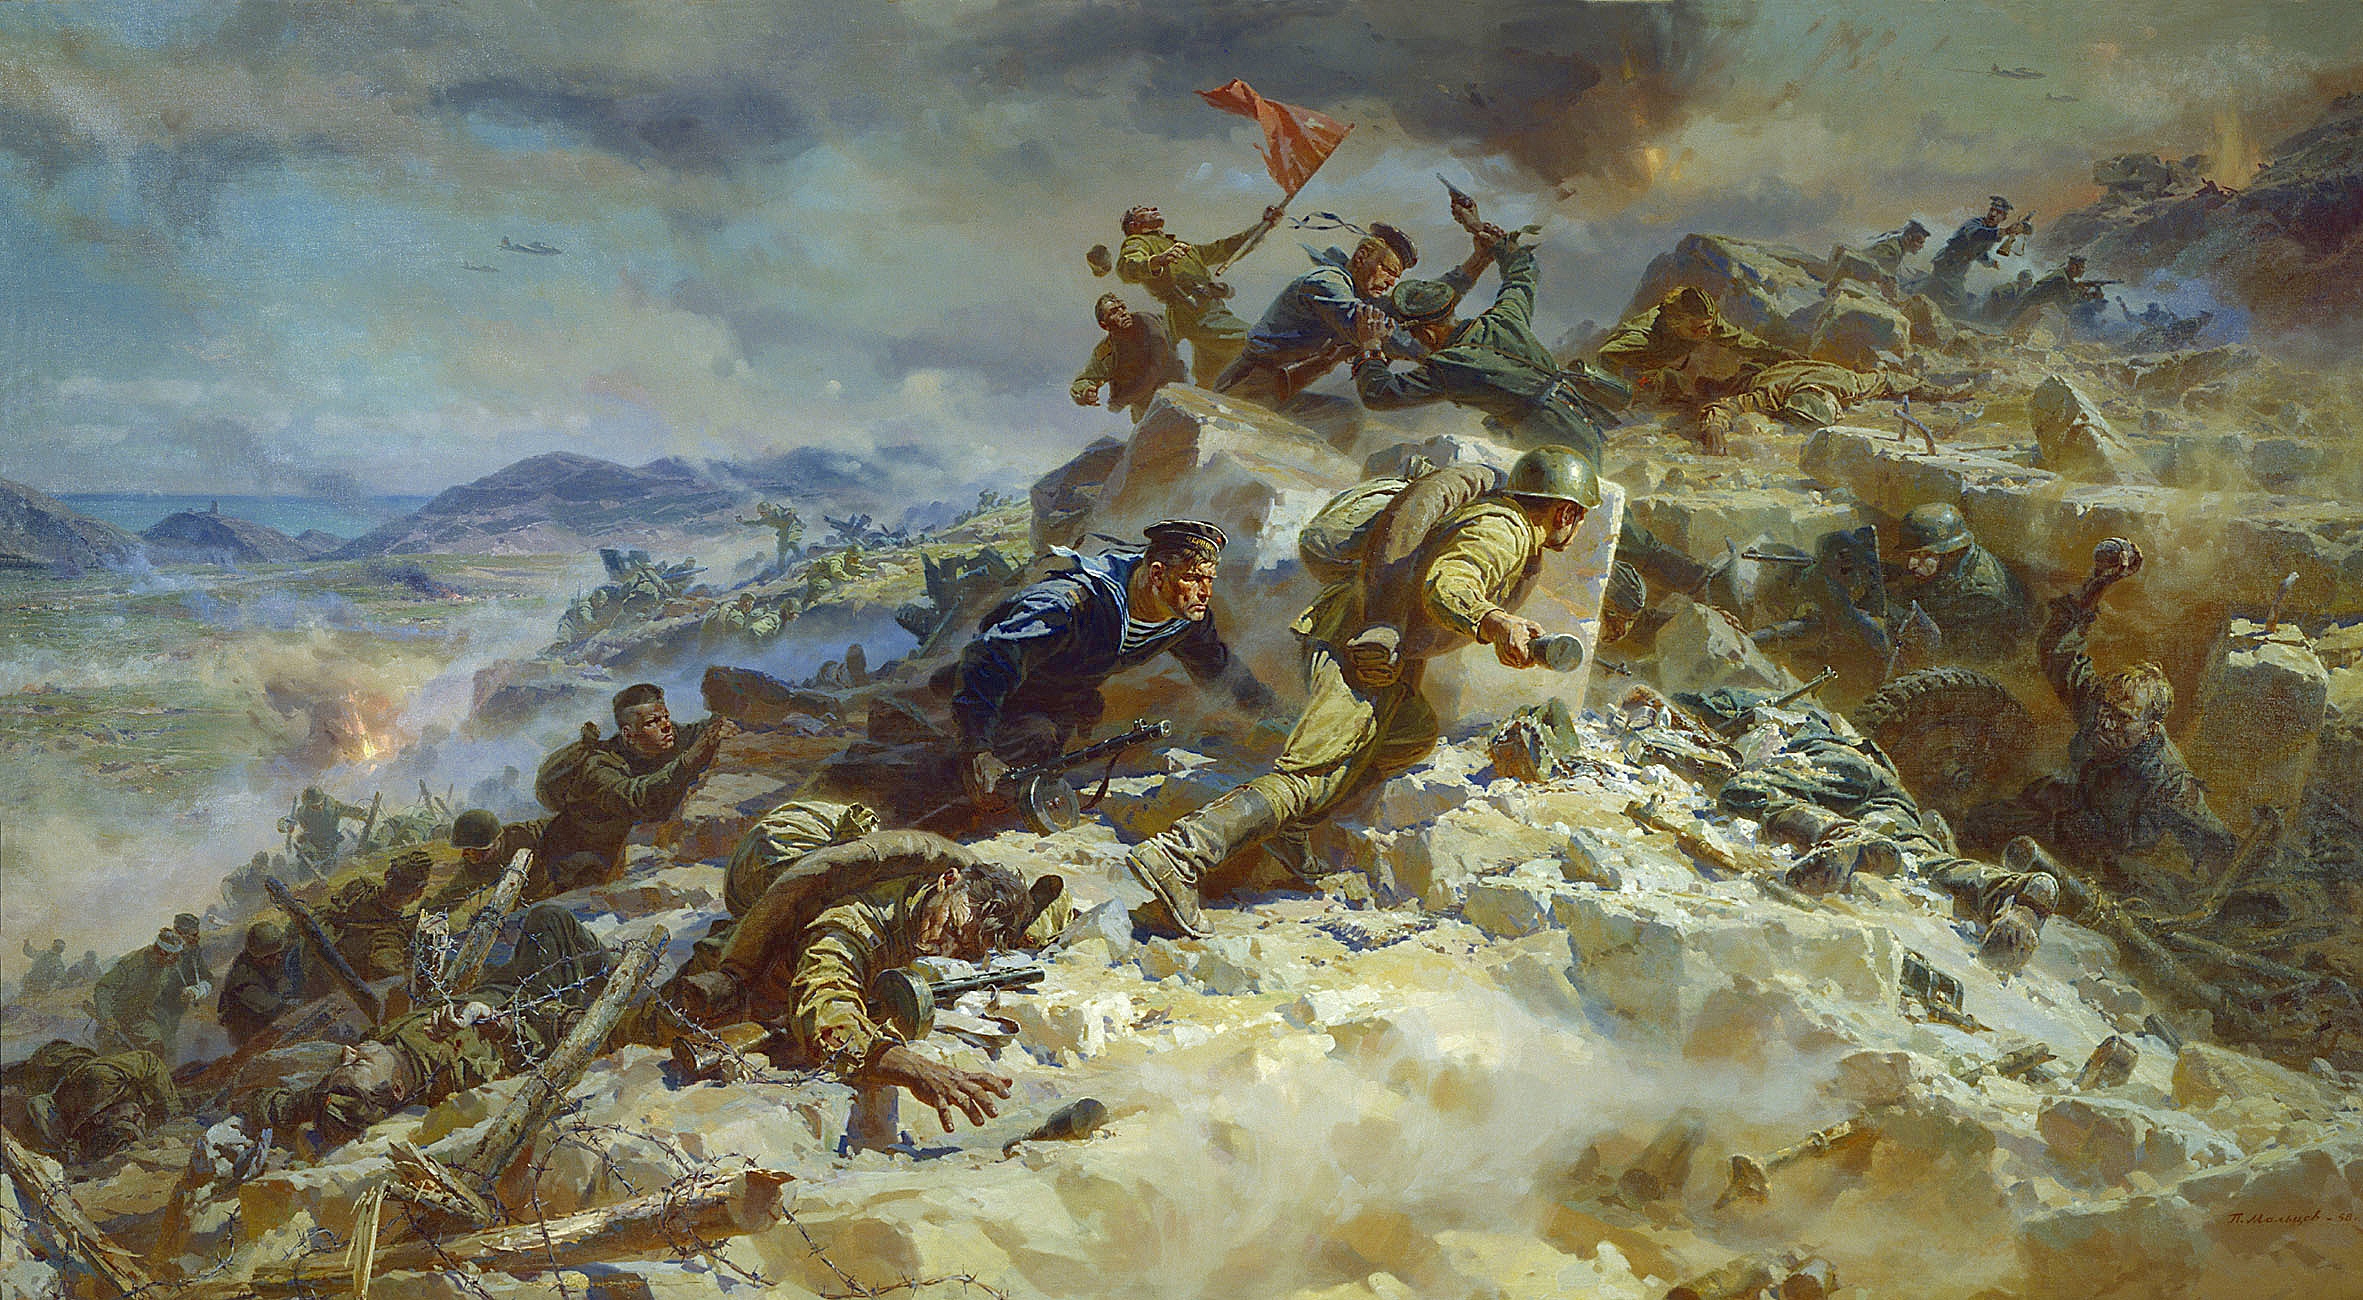 Картинка про великую войну. Штурм сапун-горы картина. Мальцев штурм сапун-горы картина.